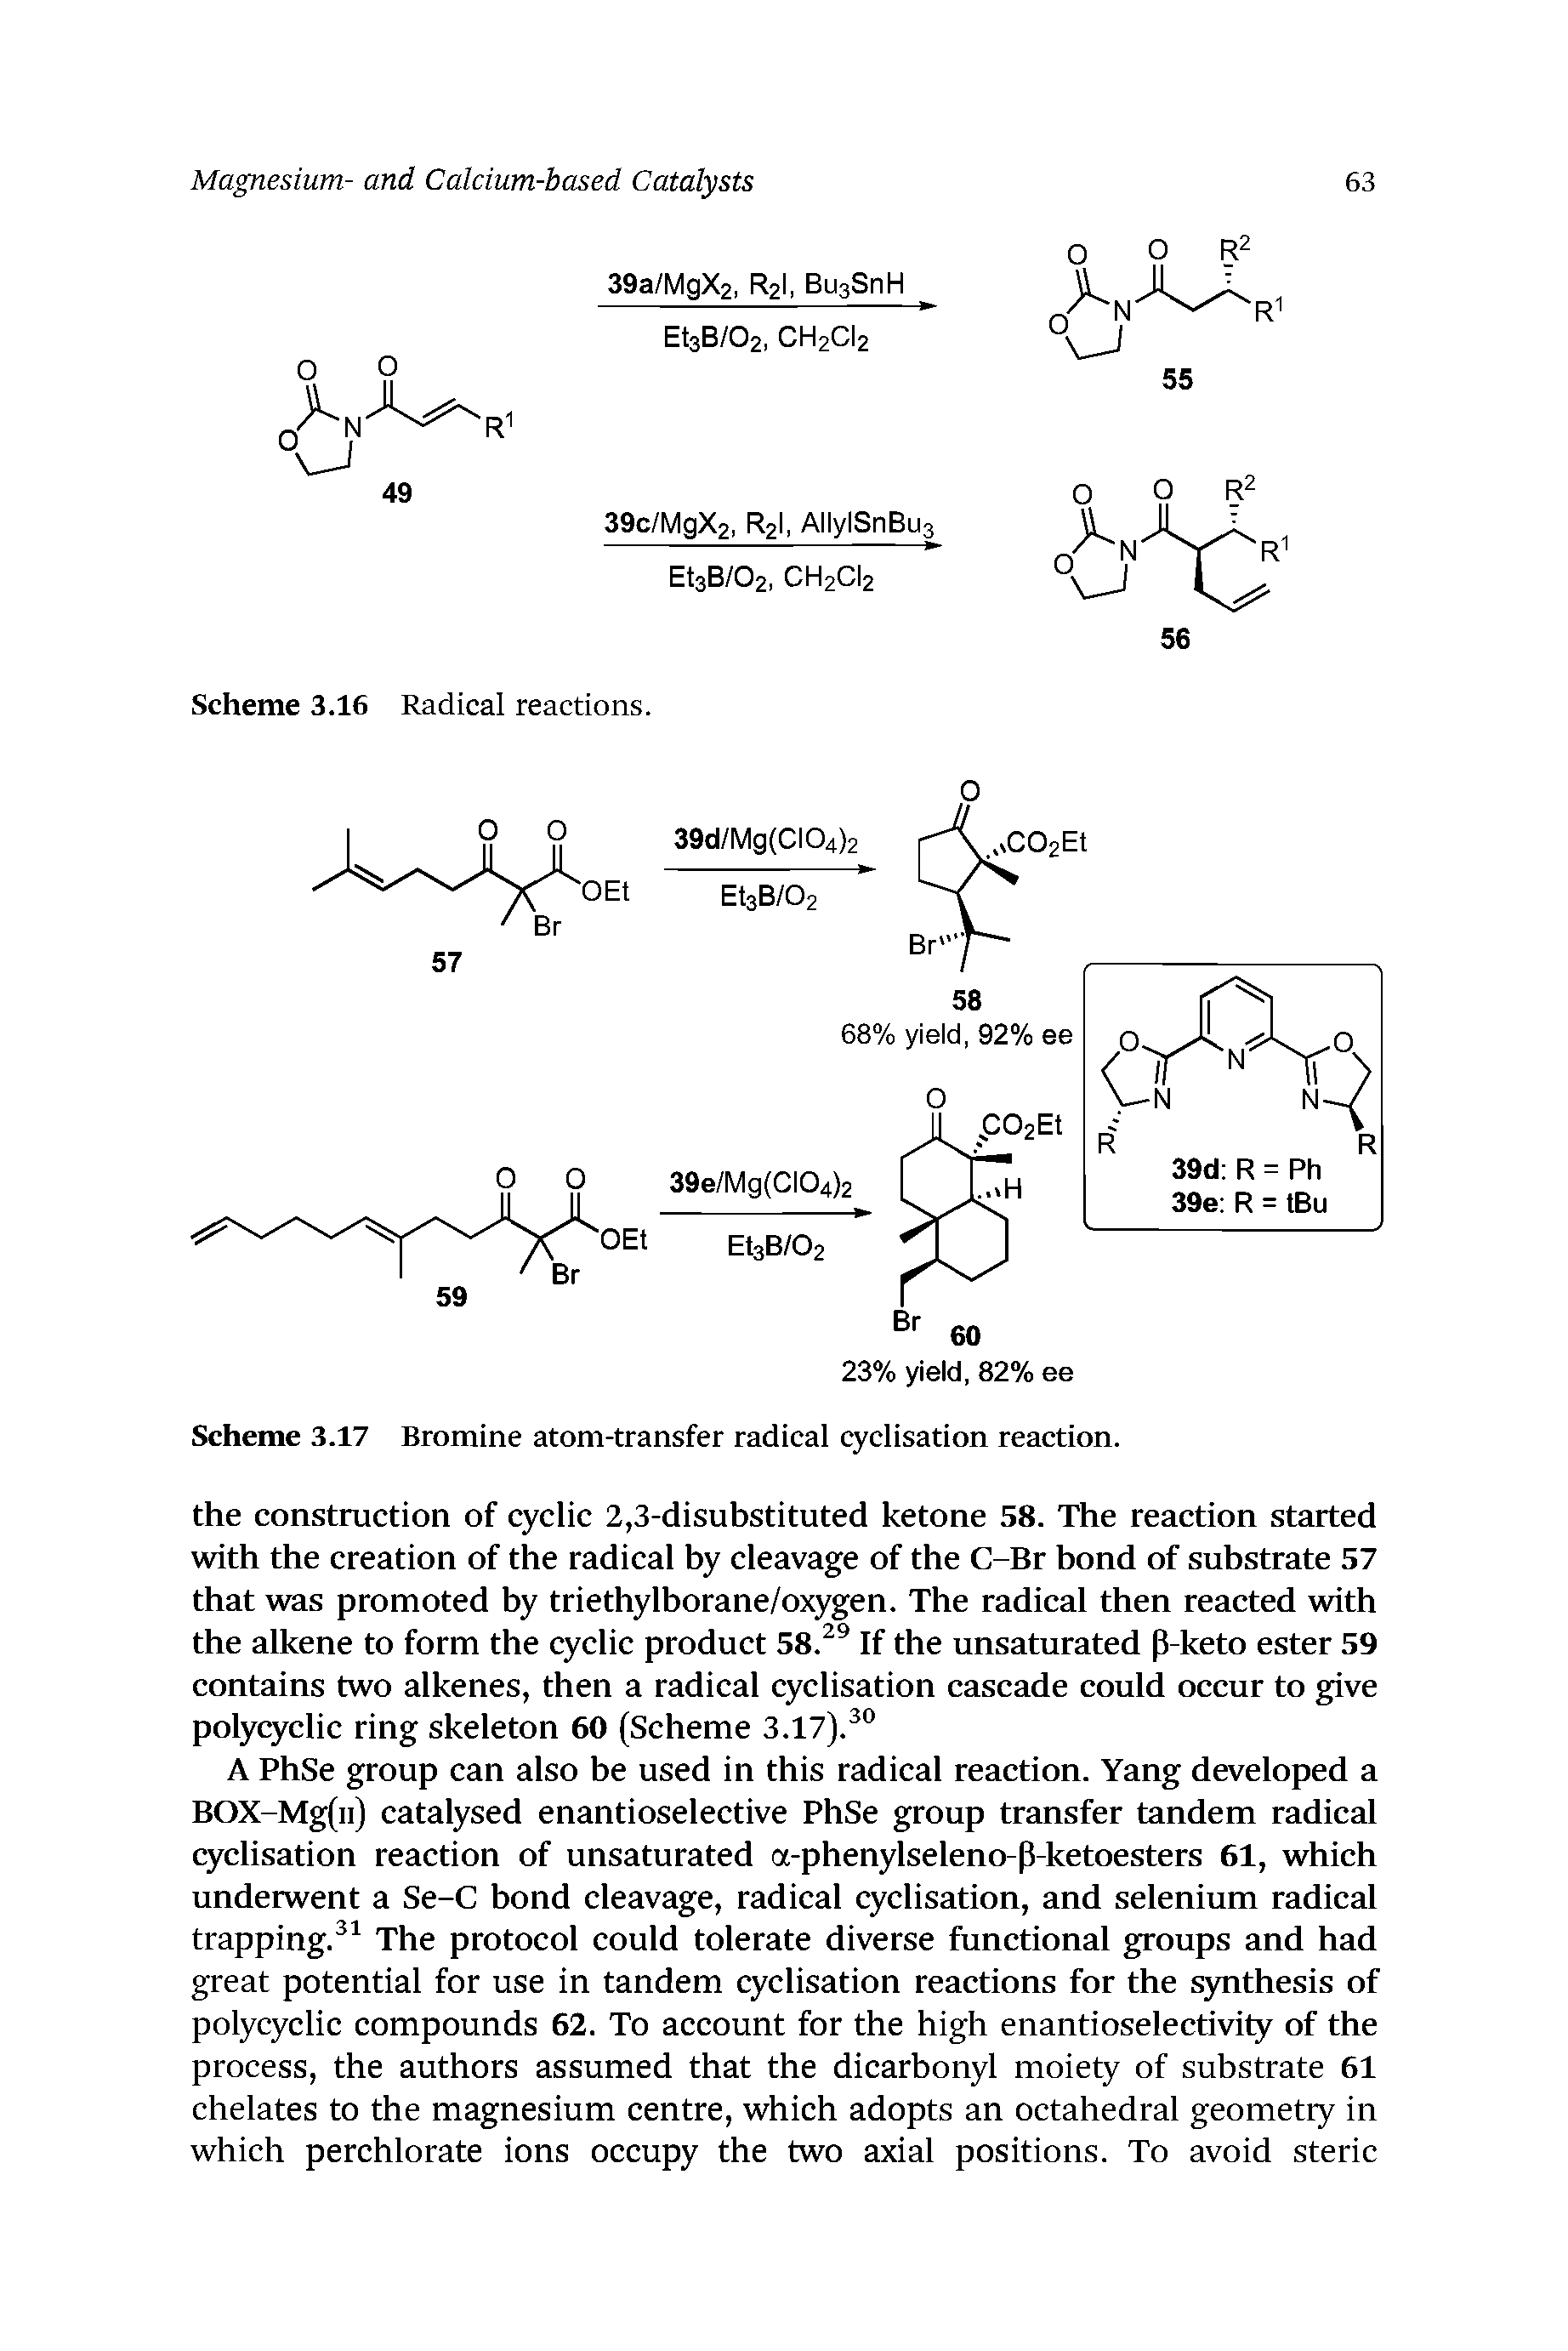 Scheme 3.17 Bromine atom-transfer radical cyclisation reaction.